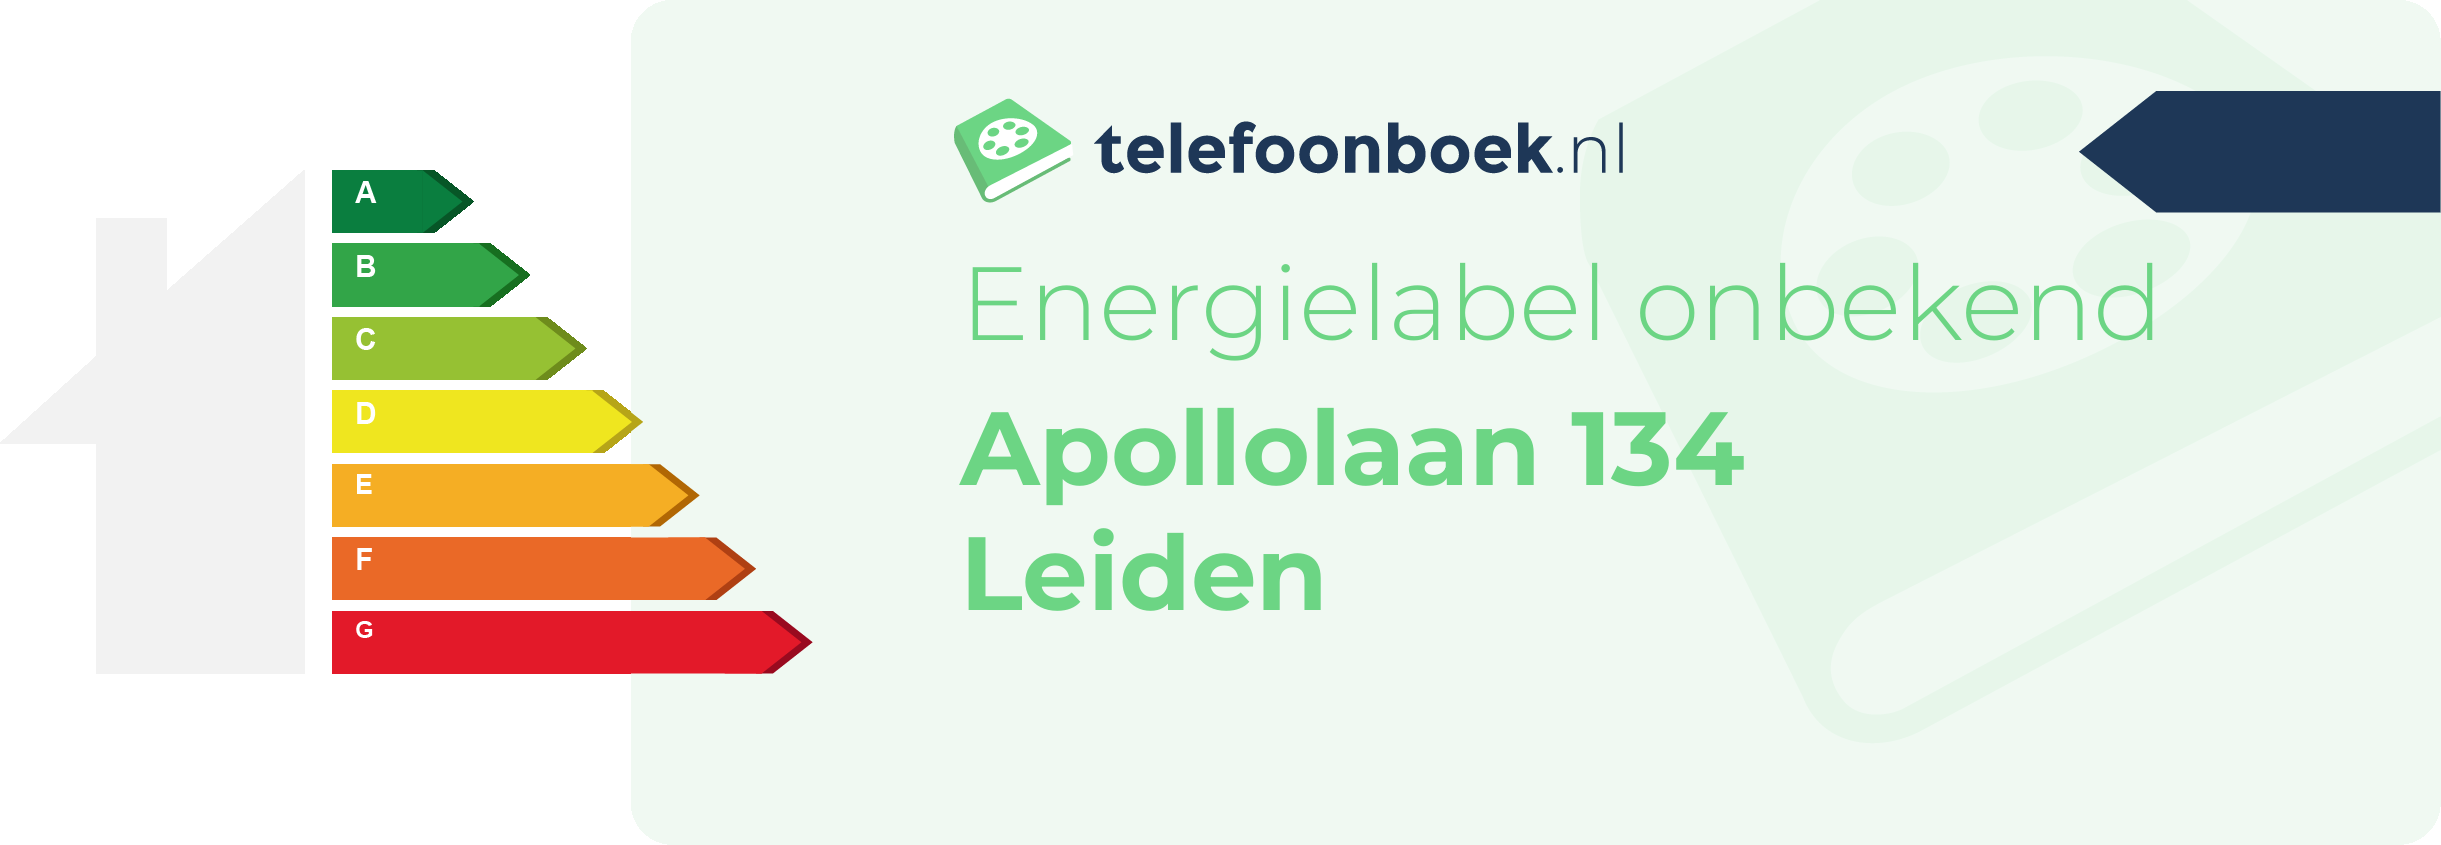 Energielabel Apollolaan 134 Leiden